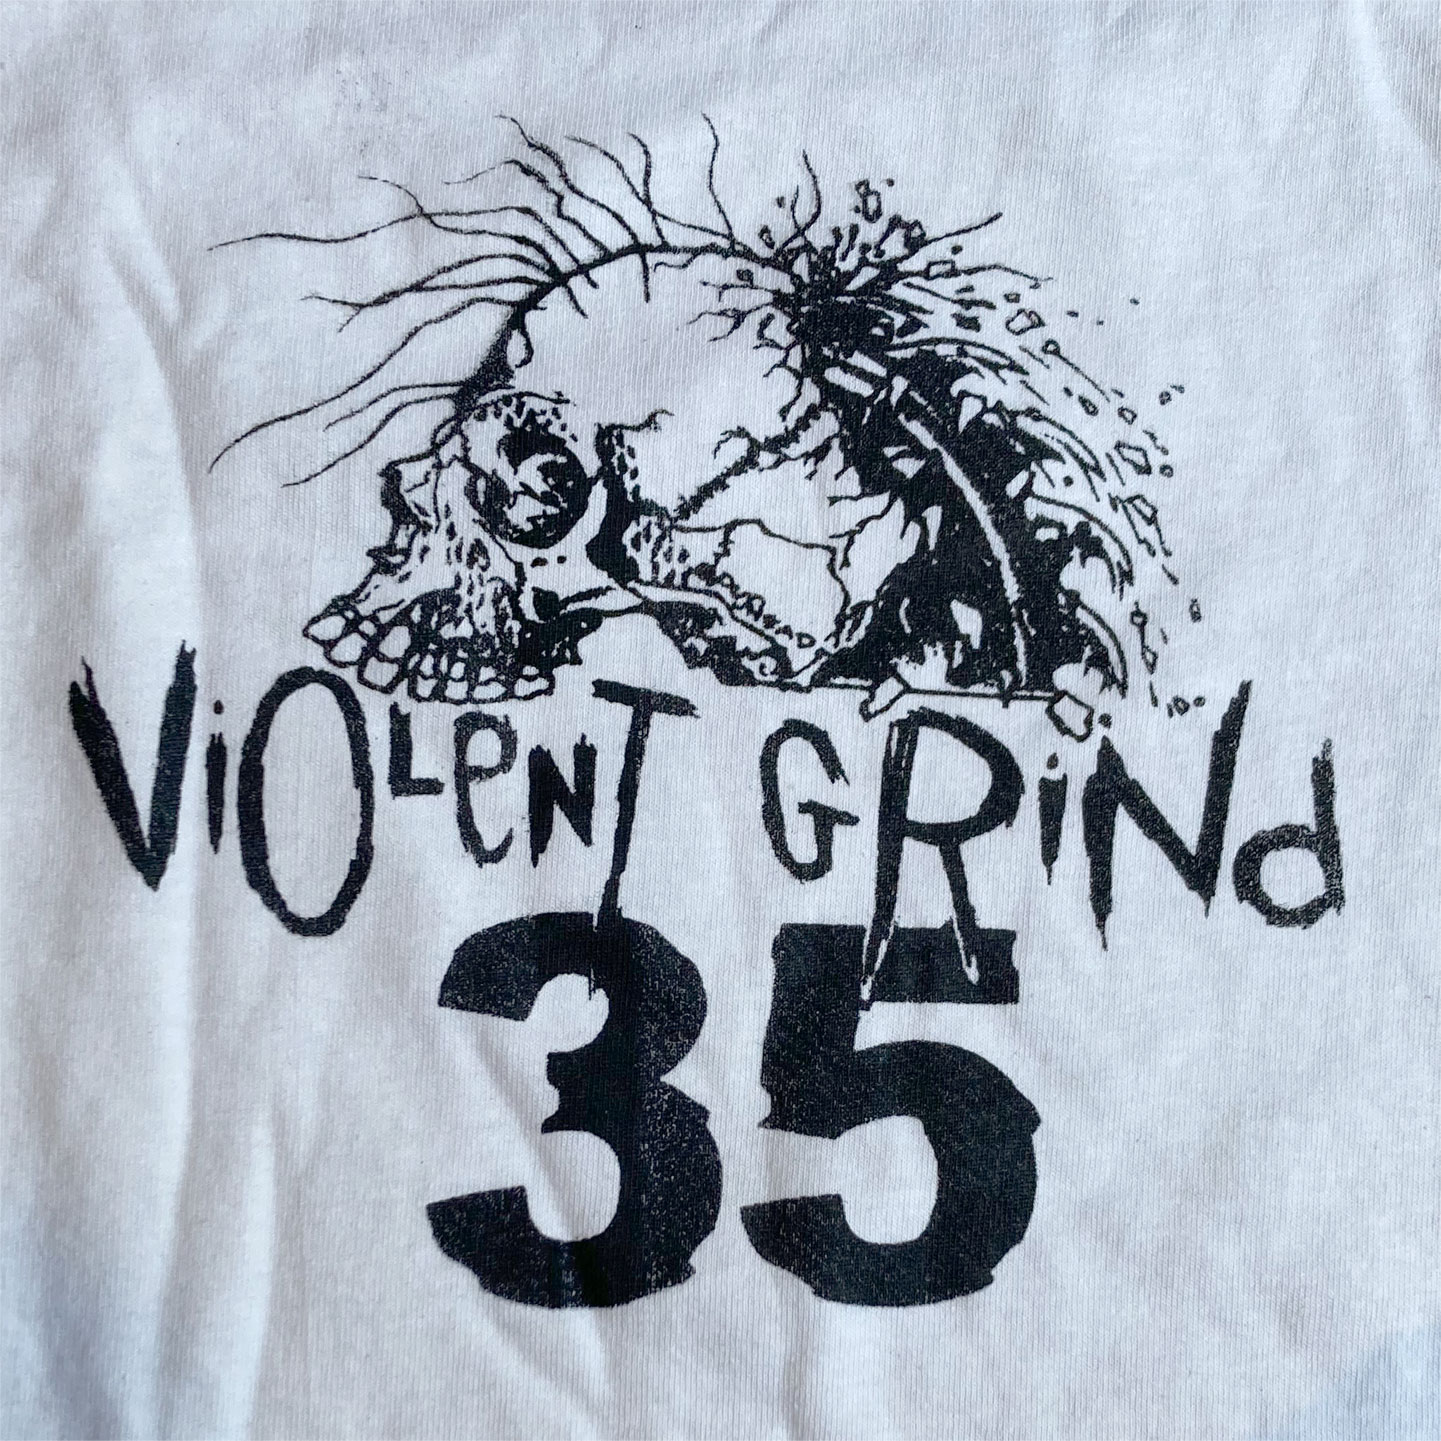 VIOLENT GRIND Tシャツ 35th LTD！